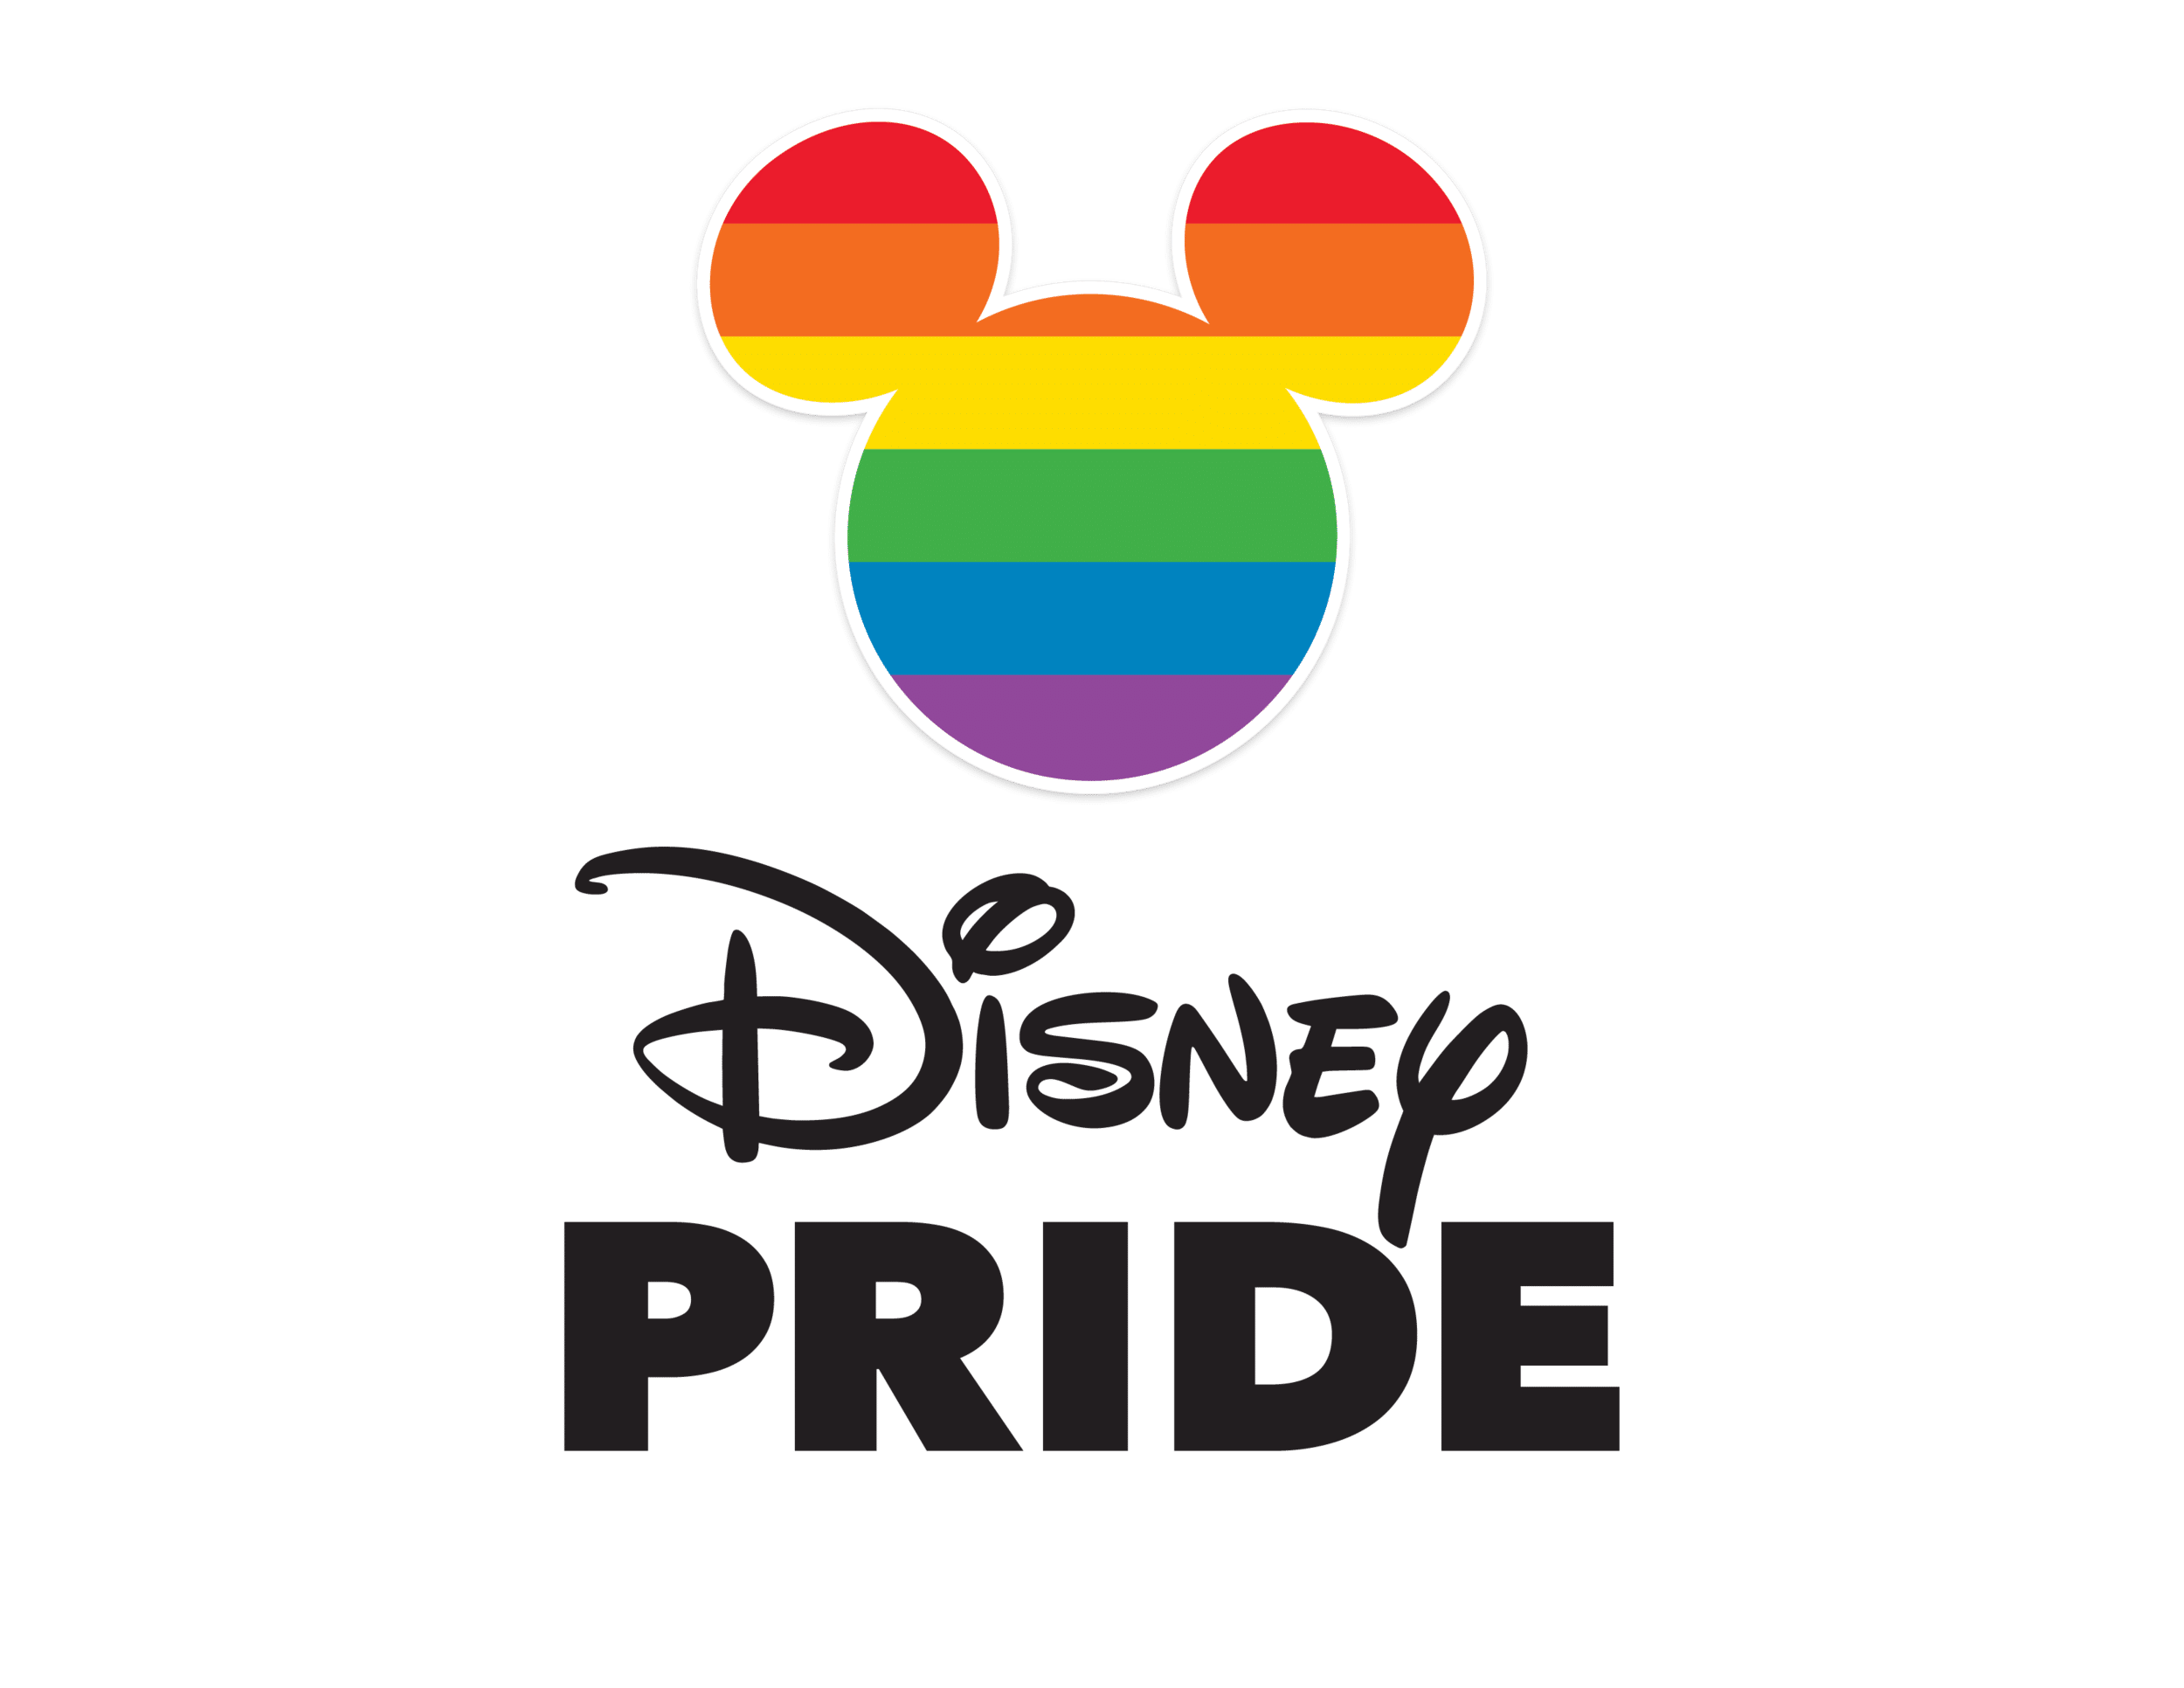 Disney+ brings Pridethemed content